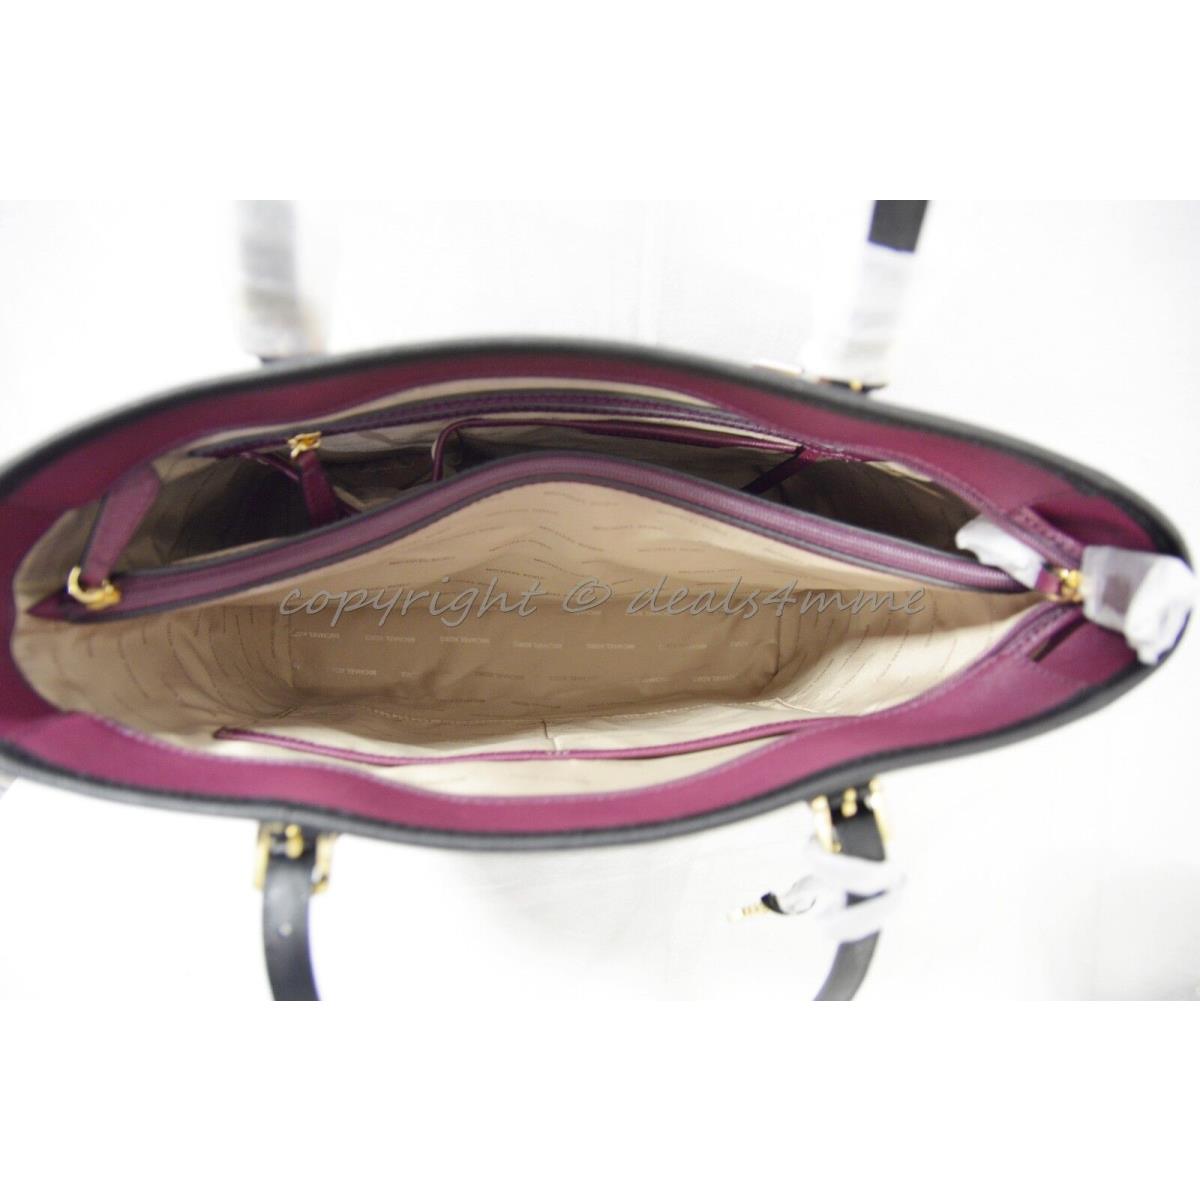 Michael Kors Purple & Silver Beaded Purse - Women's handbags